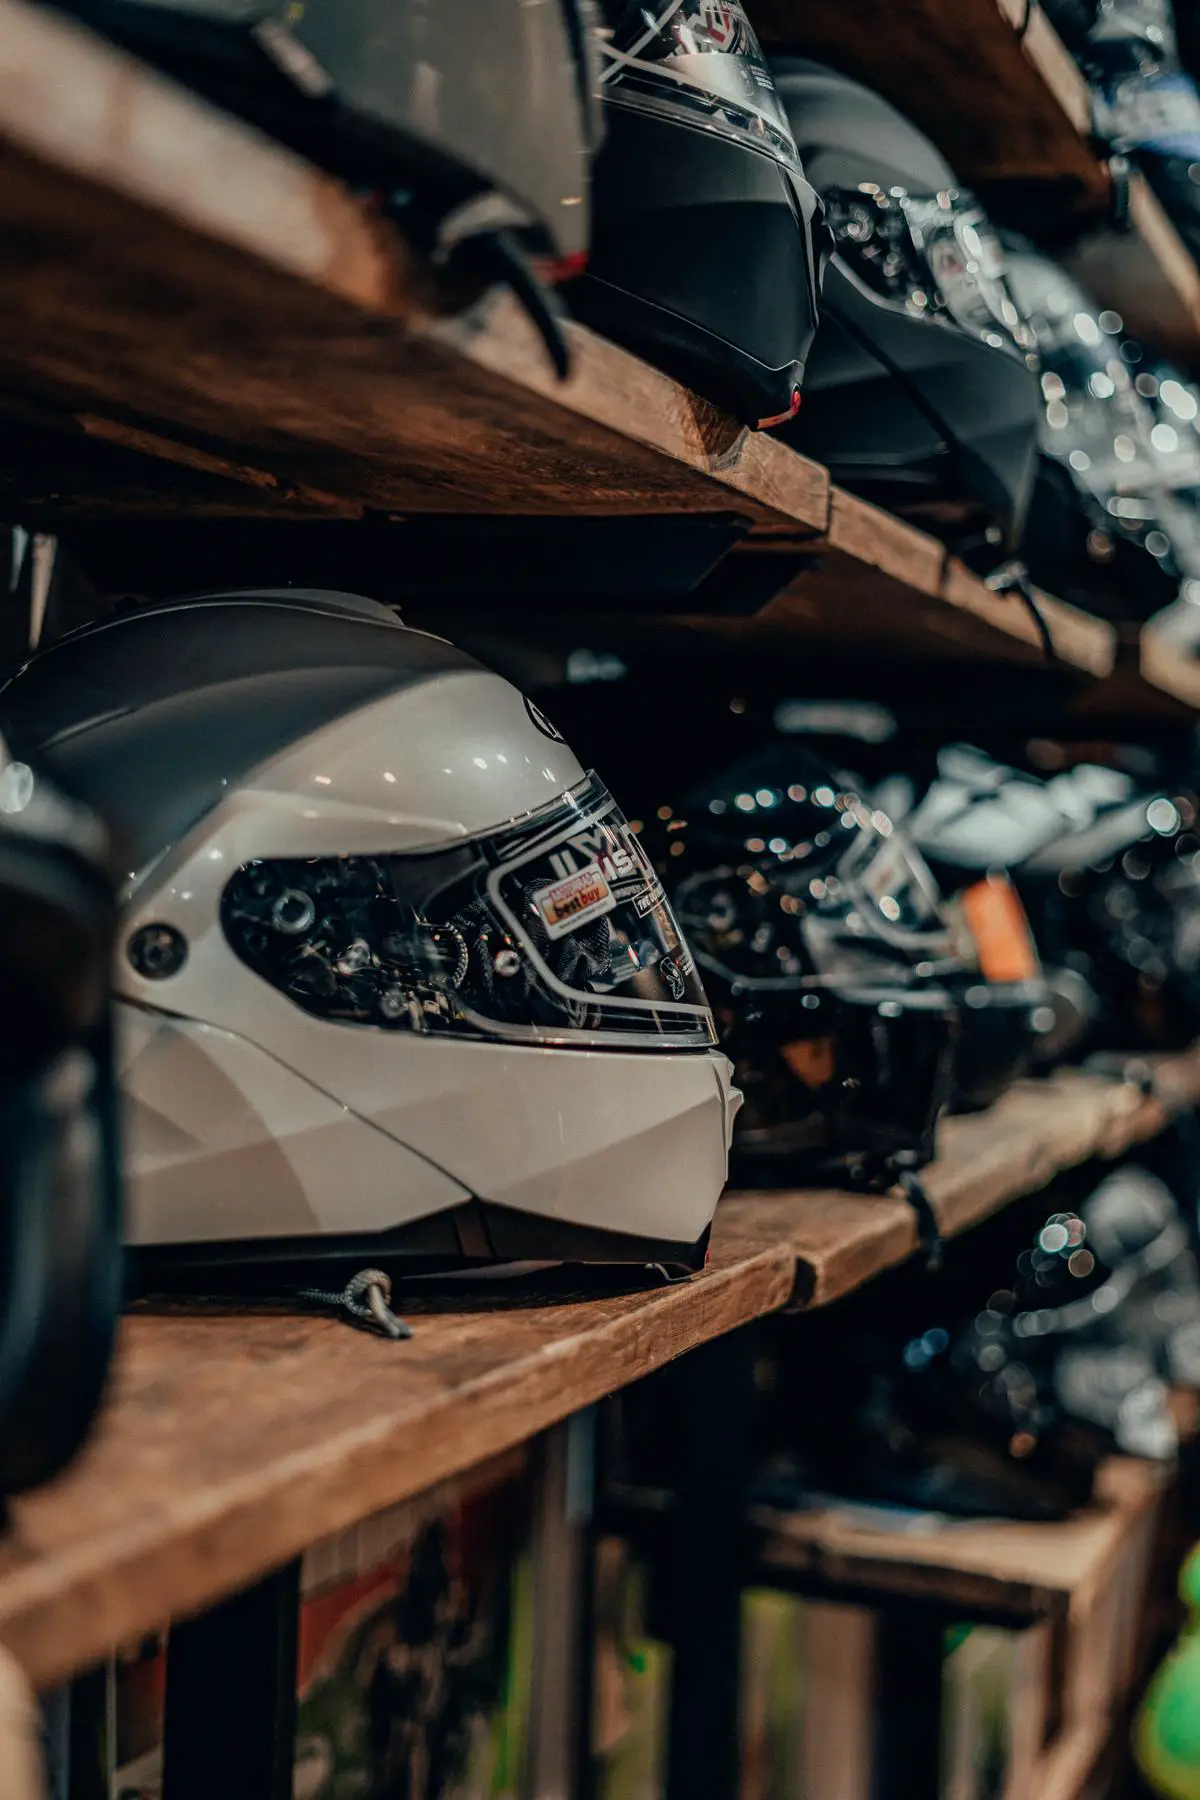 A variety of e-bike helmets displayed together